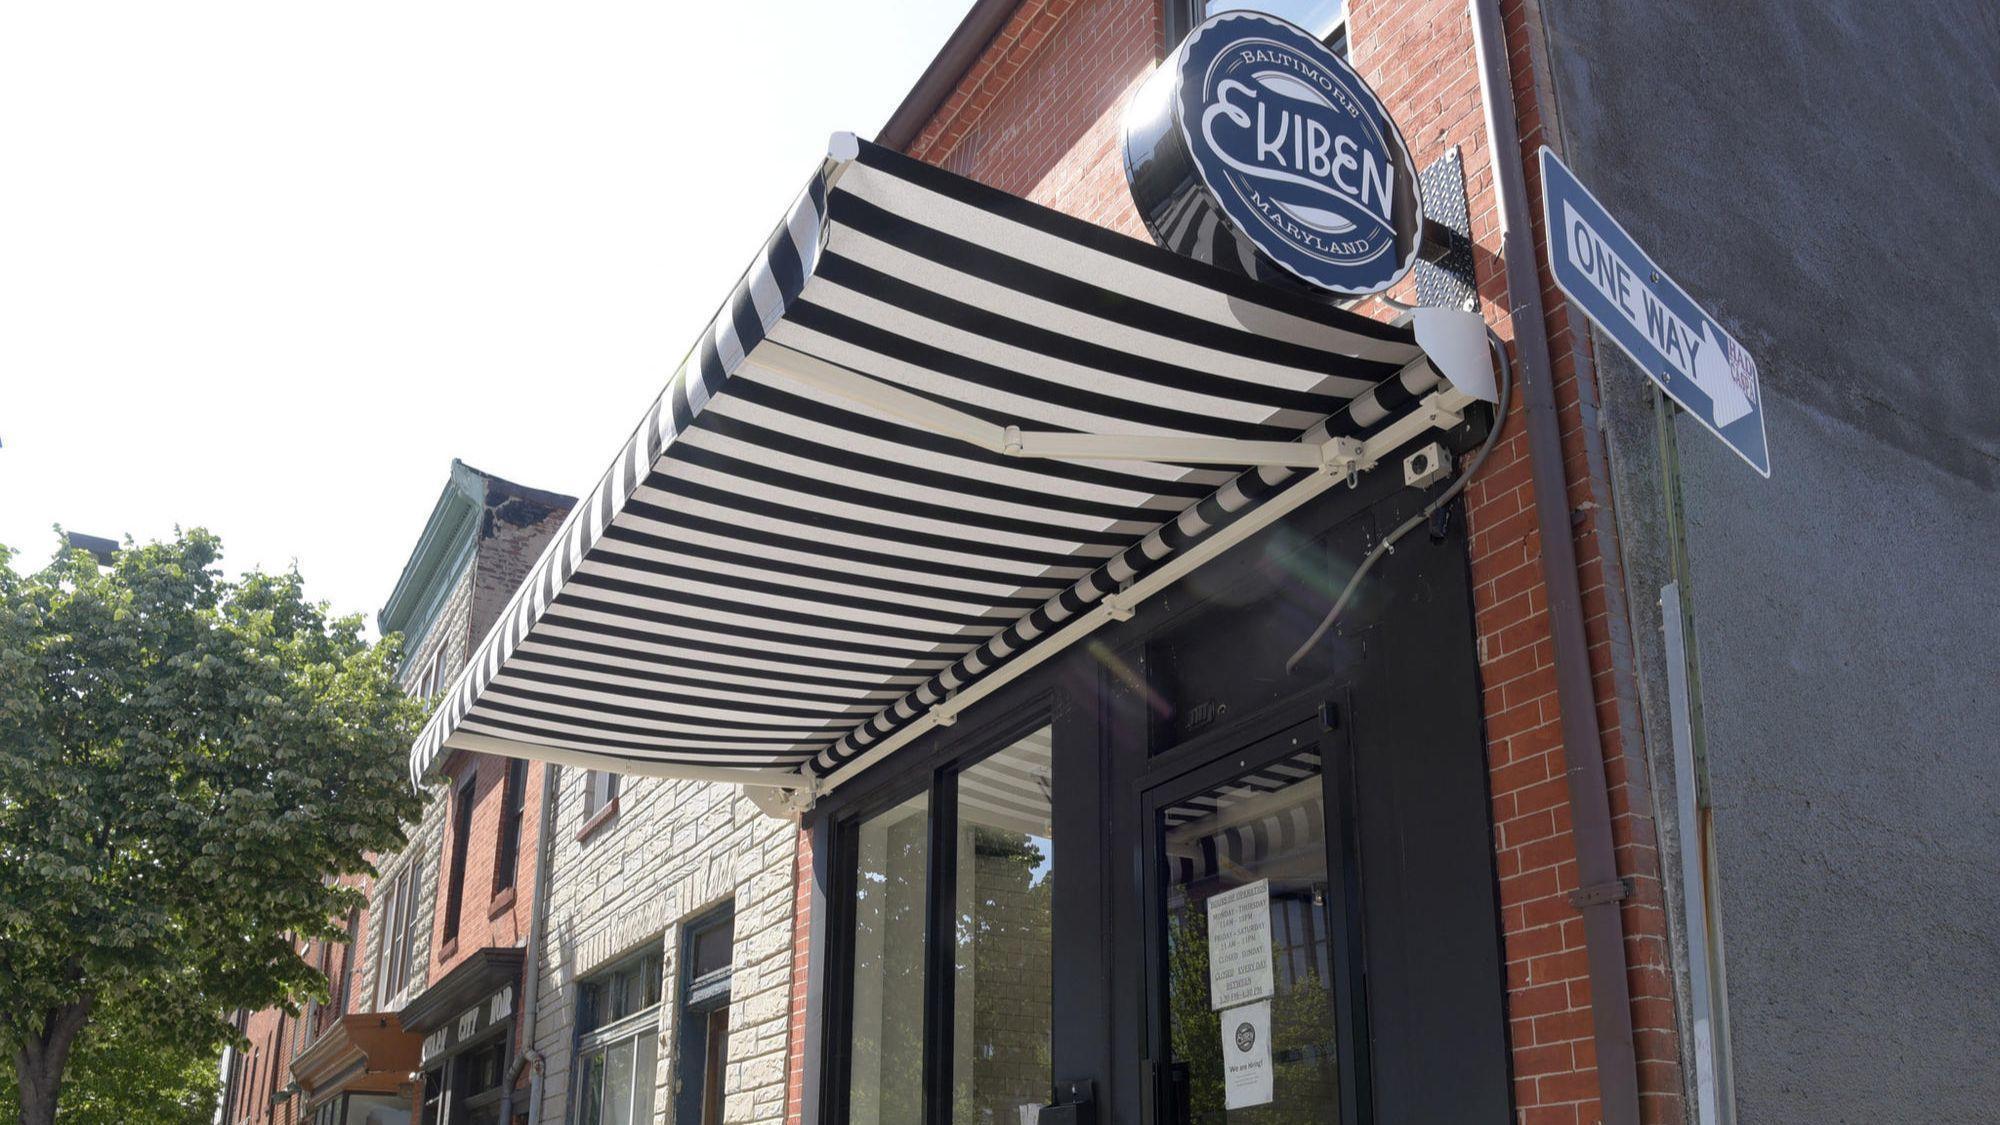 Two Baltimore restaurants make Yelp's top 100 eateries list - Baltimore Sun